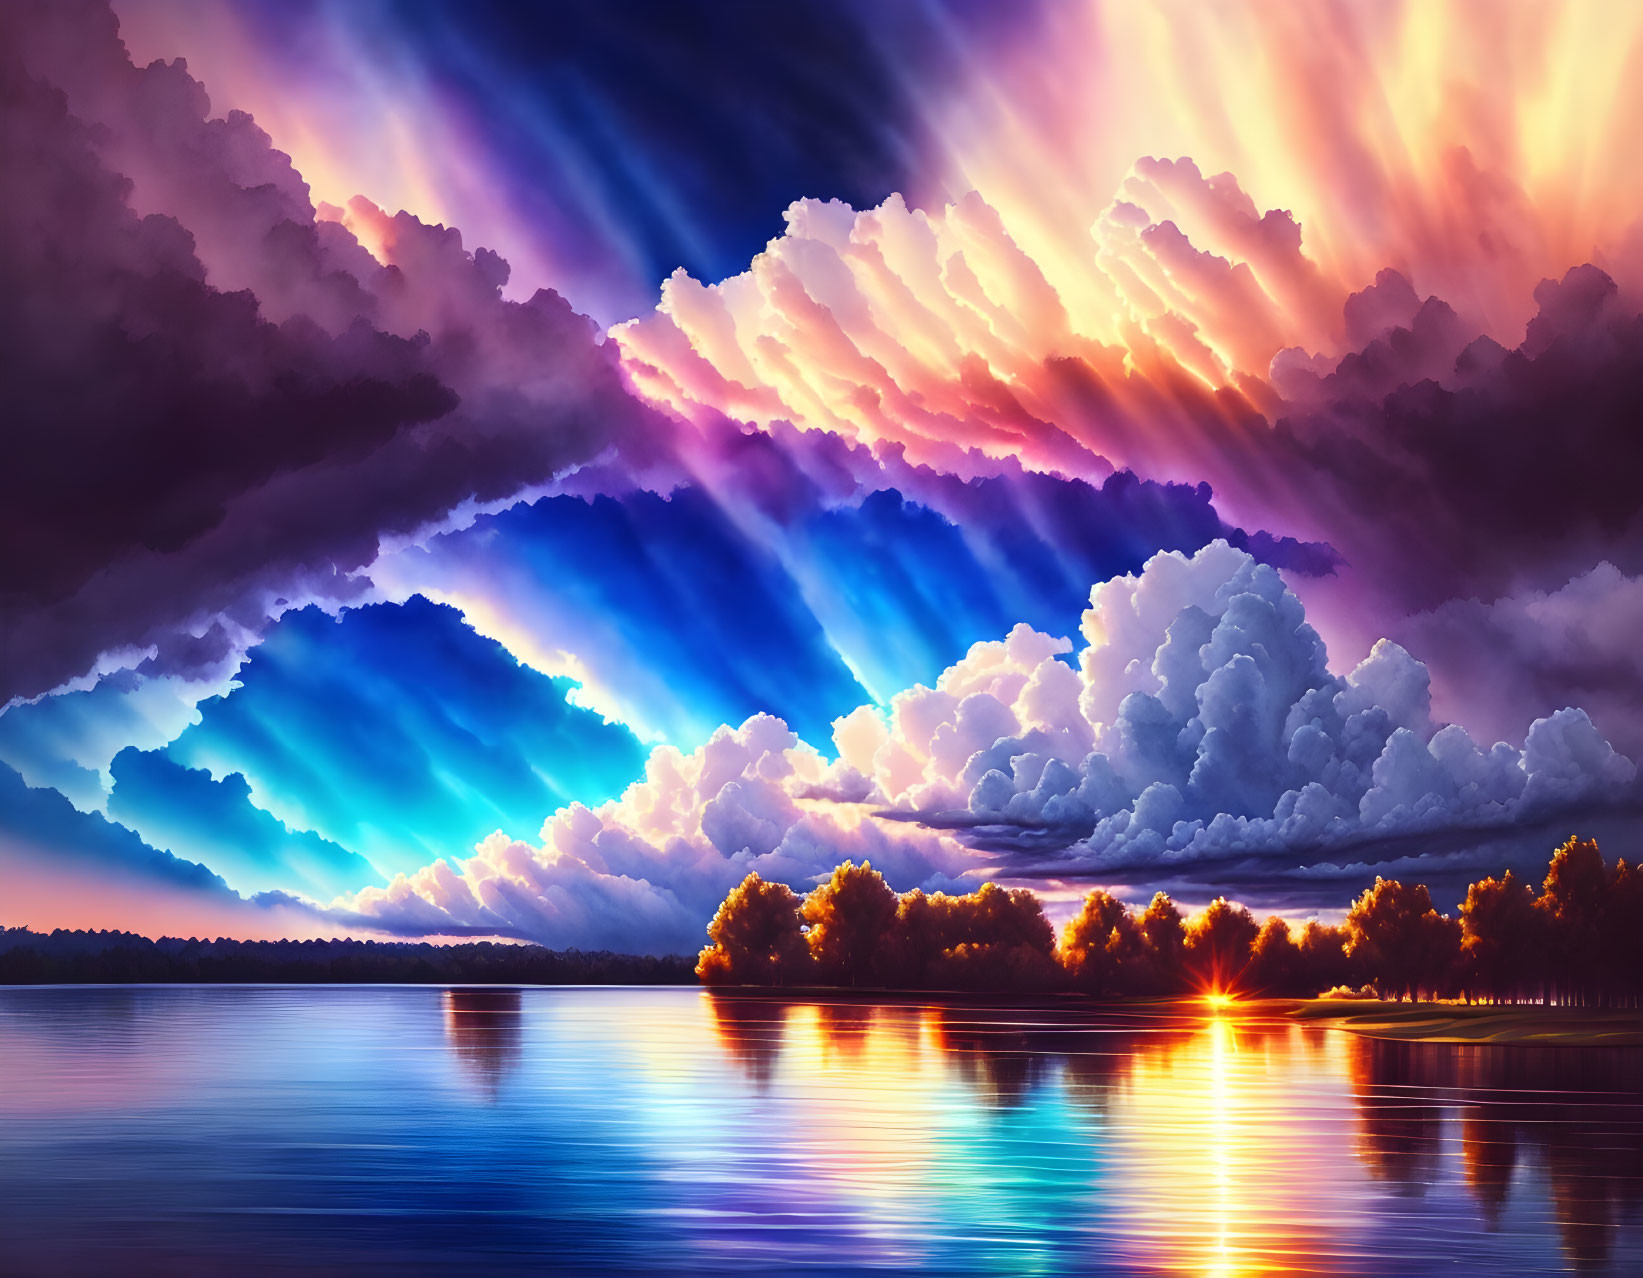  Cumulonimbus clouds, lake, reflection, sun rays, 